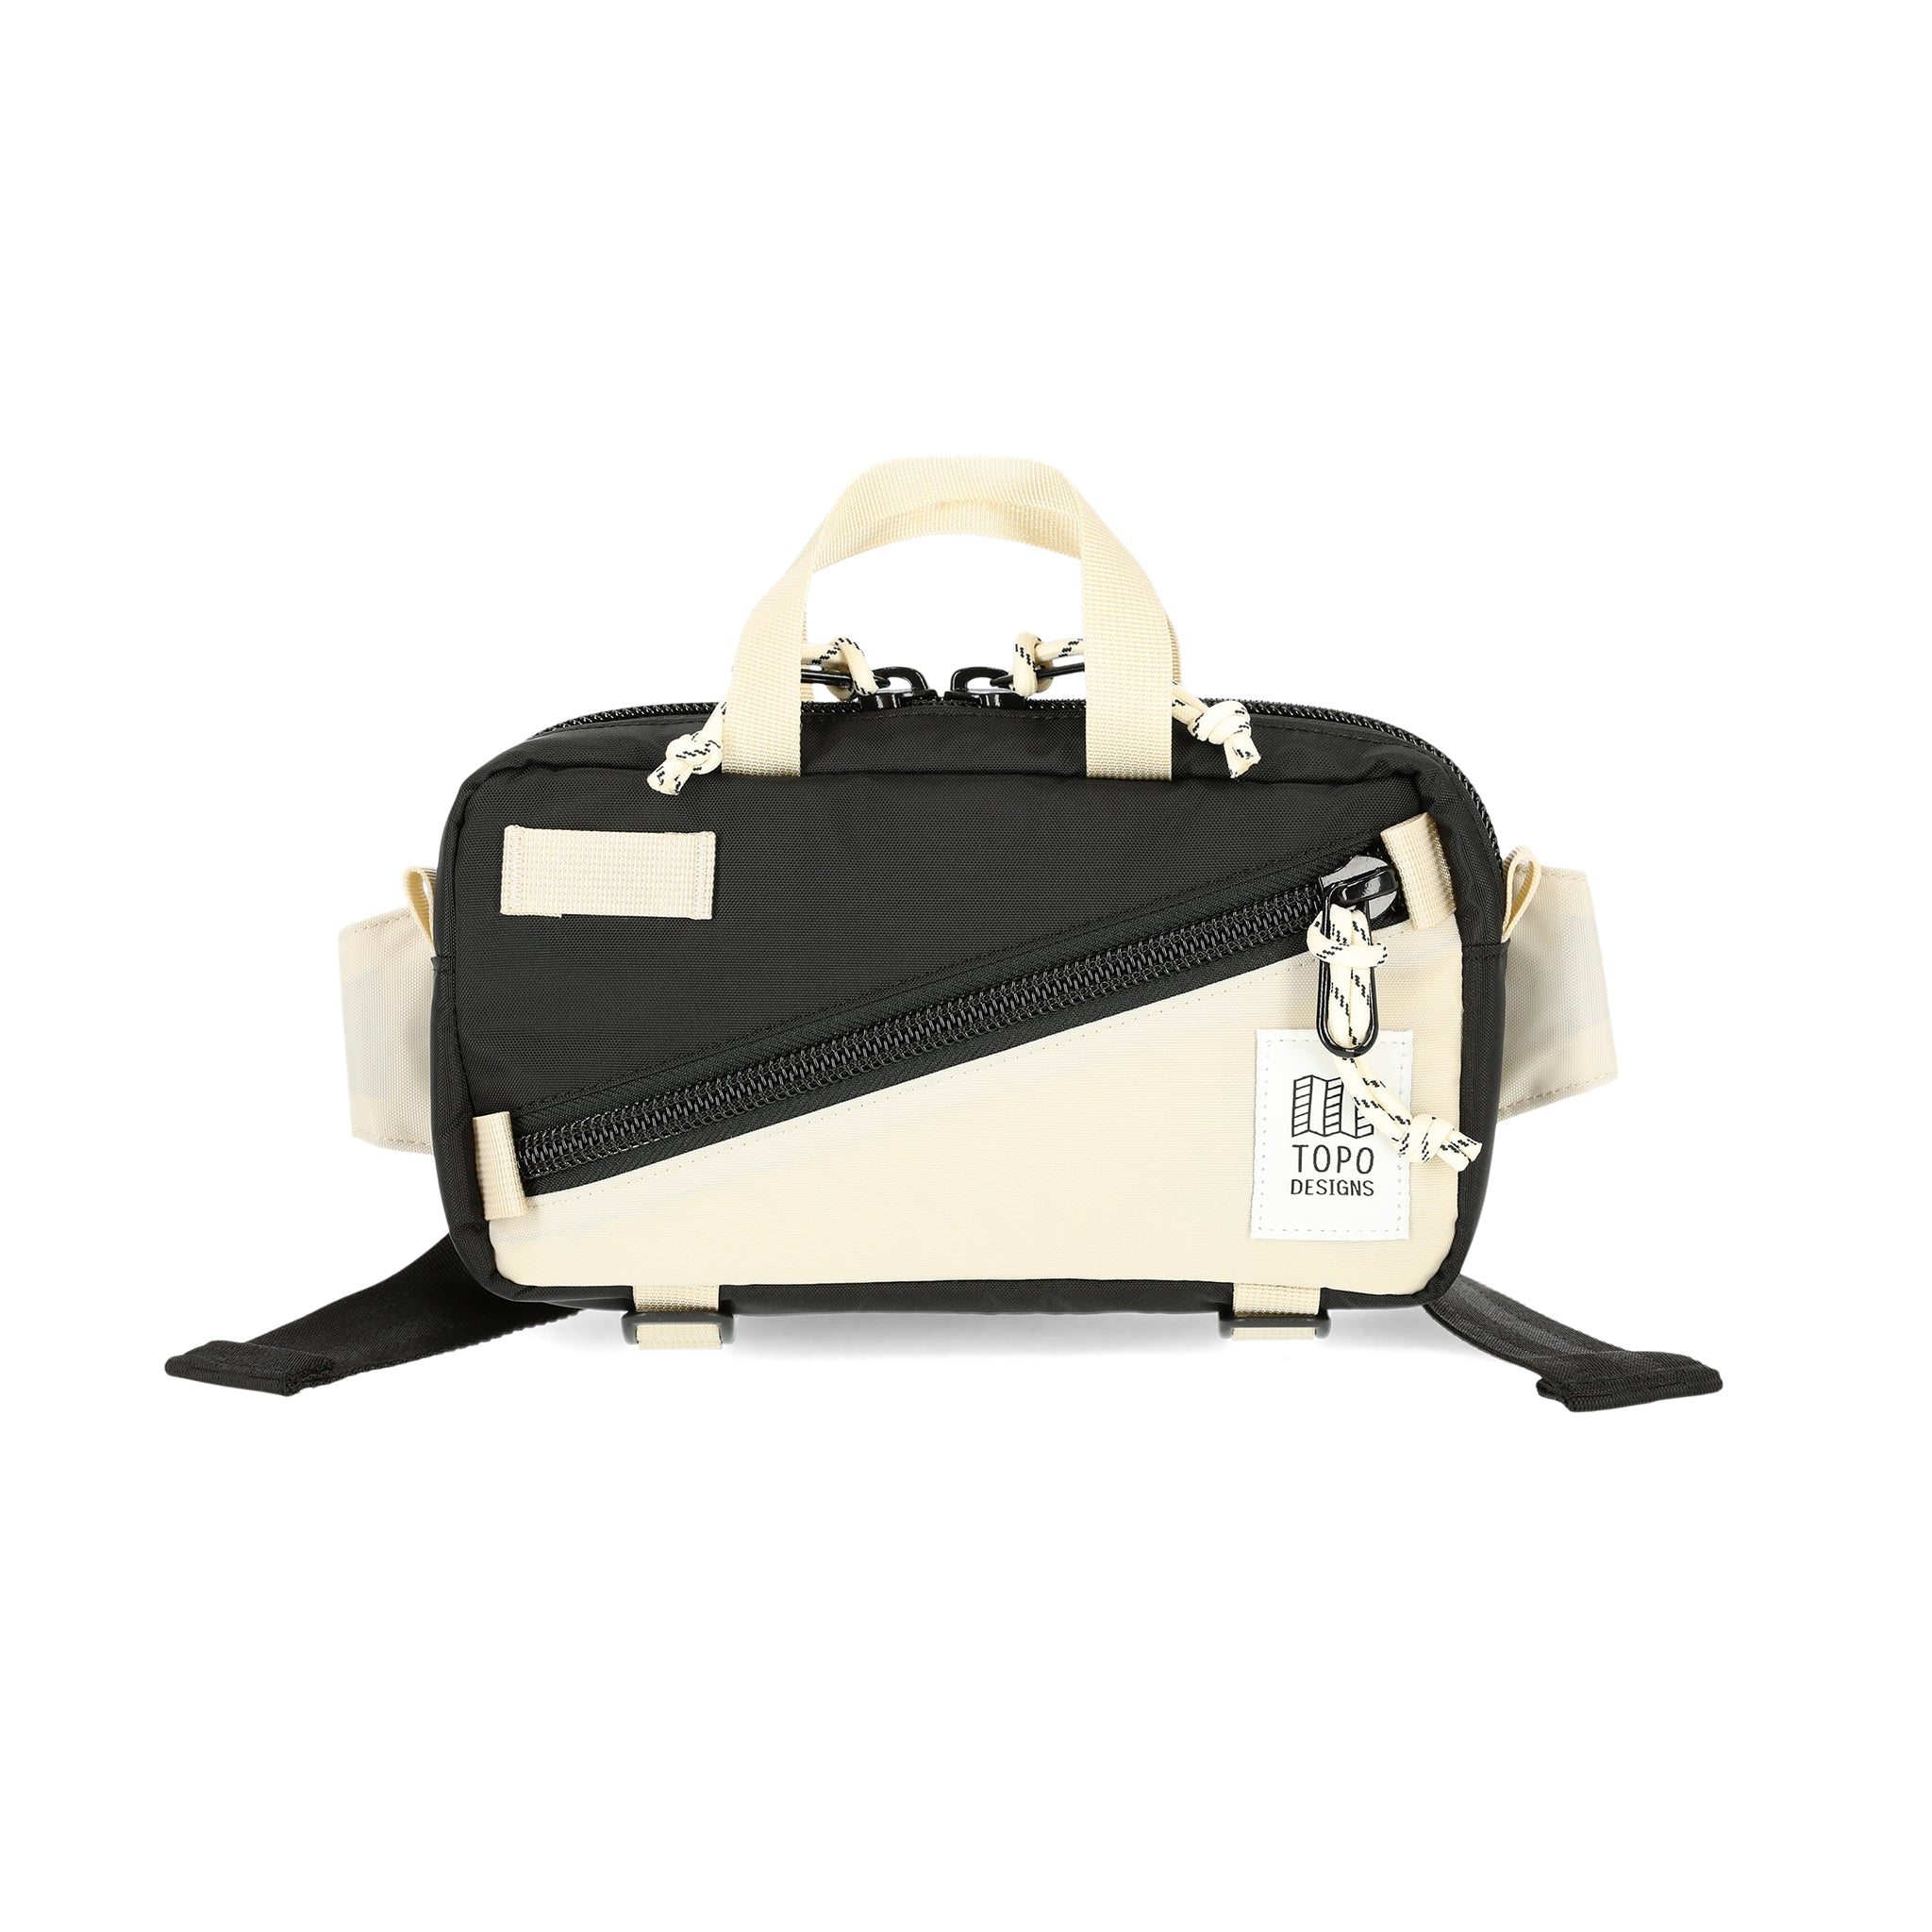 Topo Designs Mini Quick Pack crossbody hip fanny bum bag in "Black / Bone White" recycled nylon.